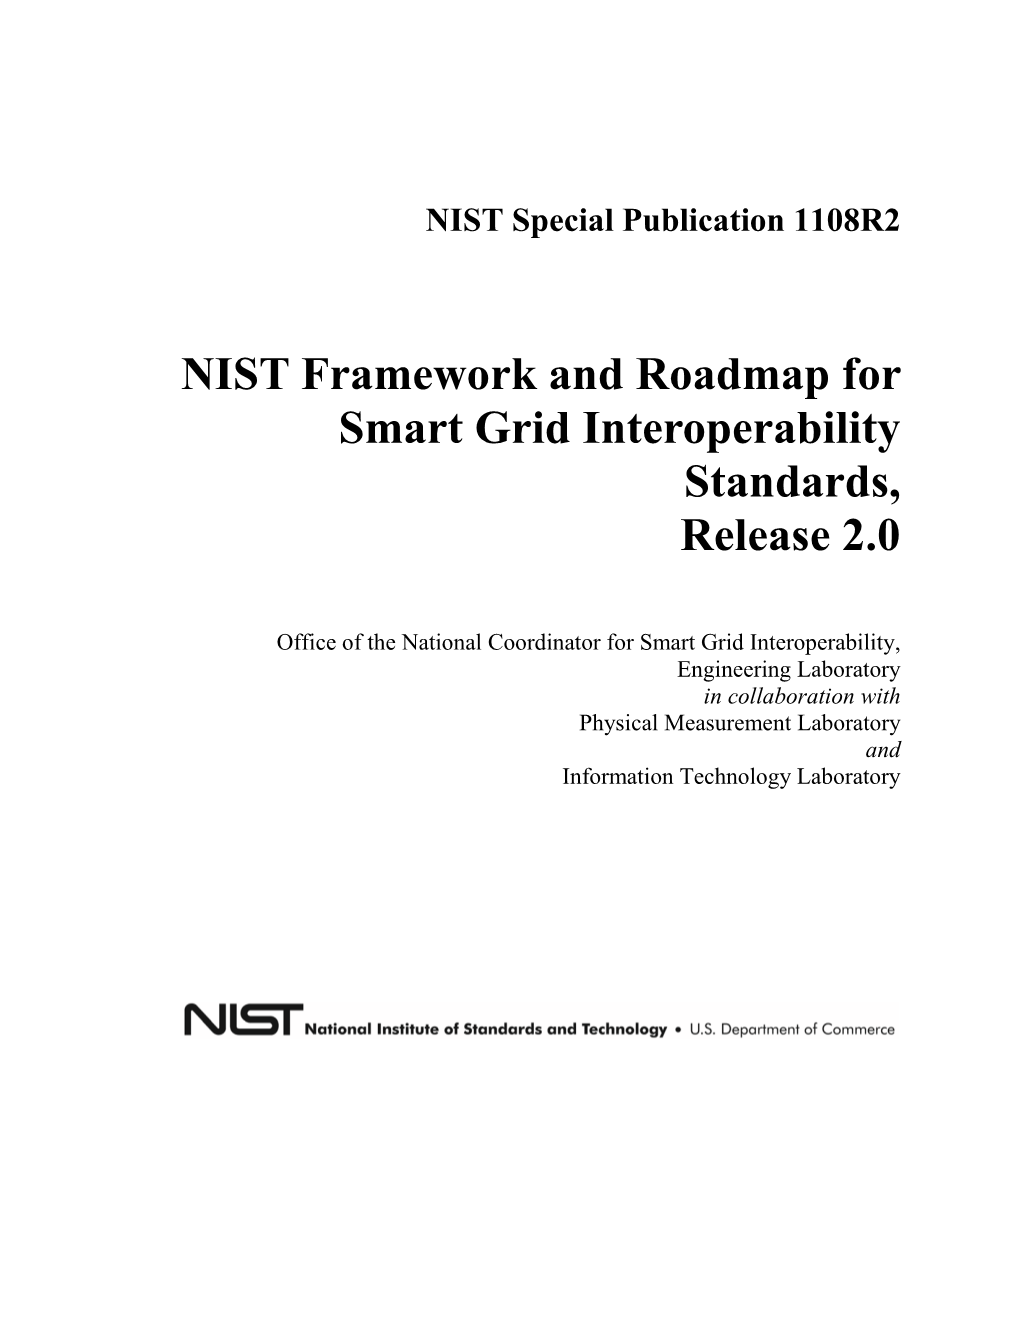 NIST Framework and Roadmap for Smart Grid Interoperability Standards, Release 2.0